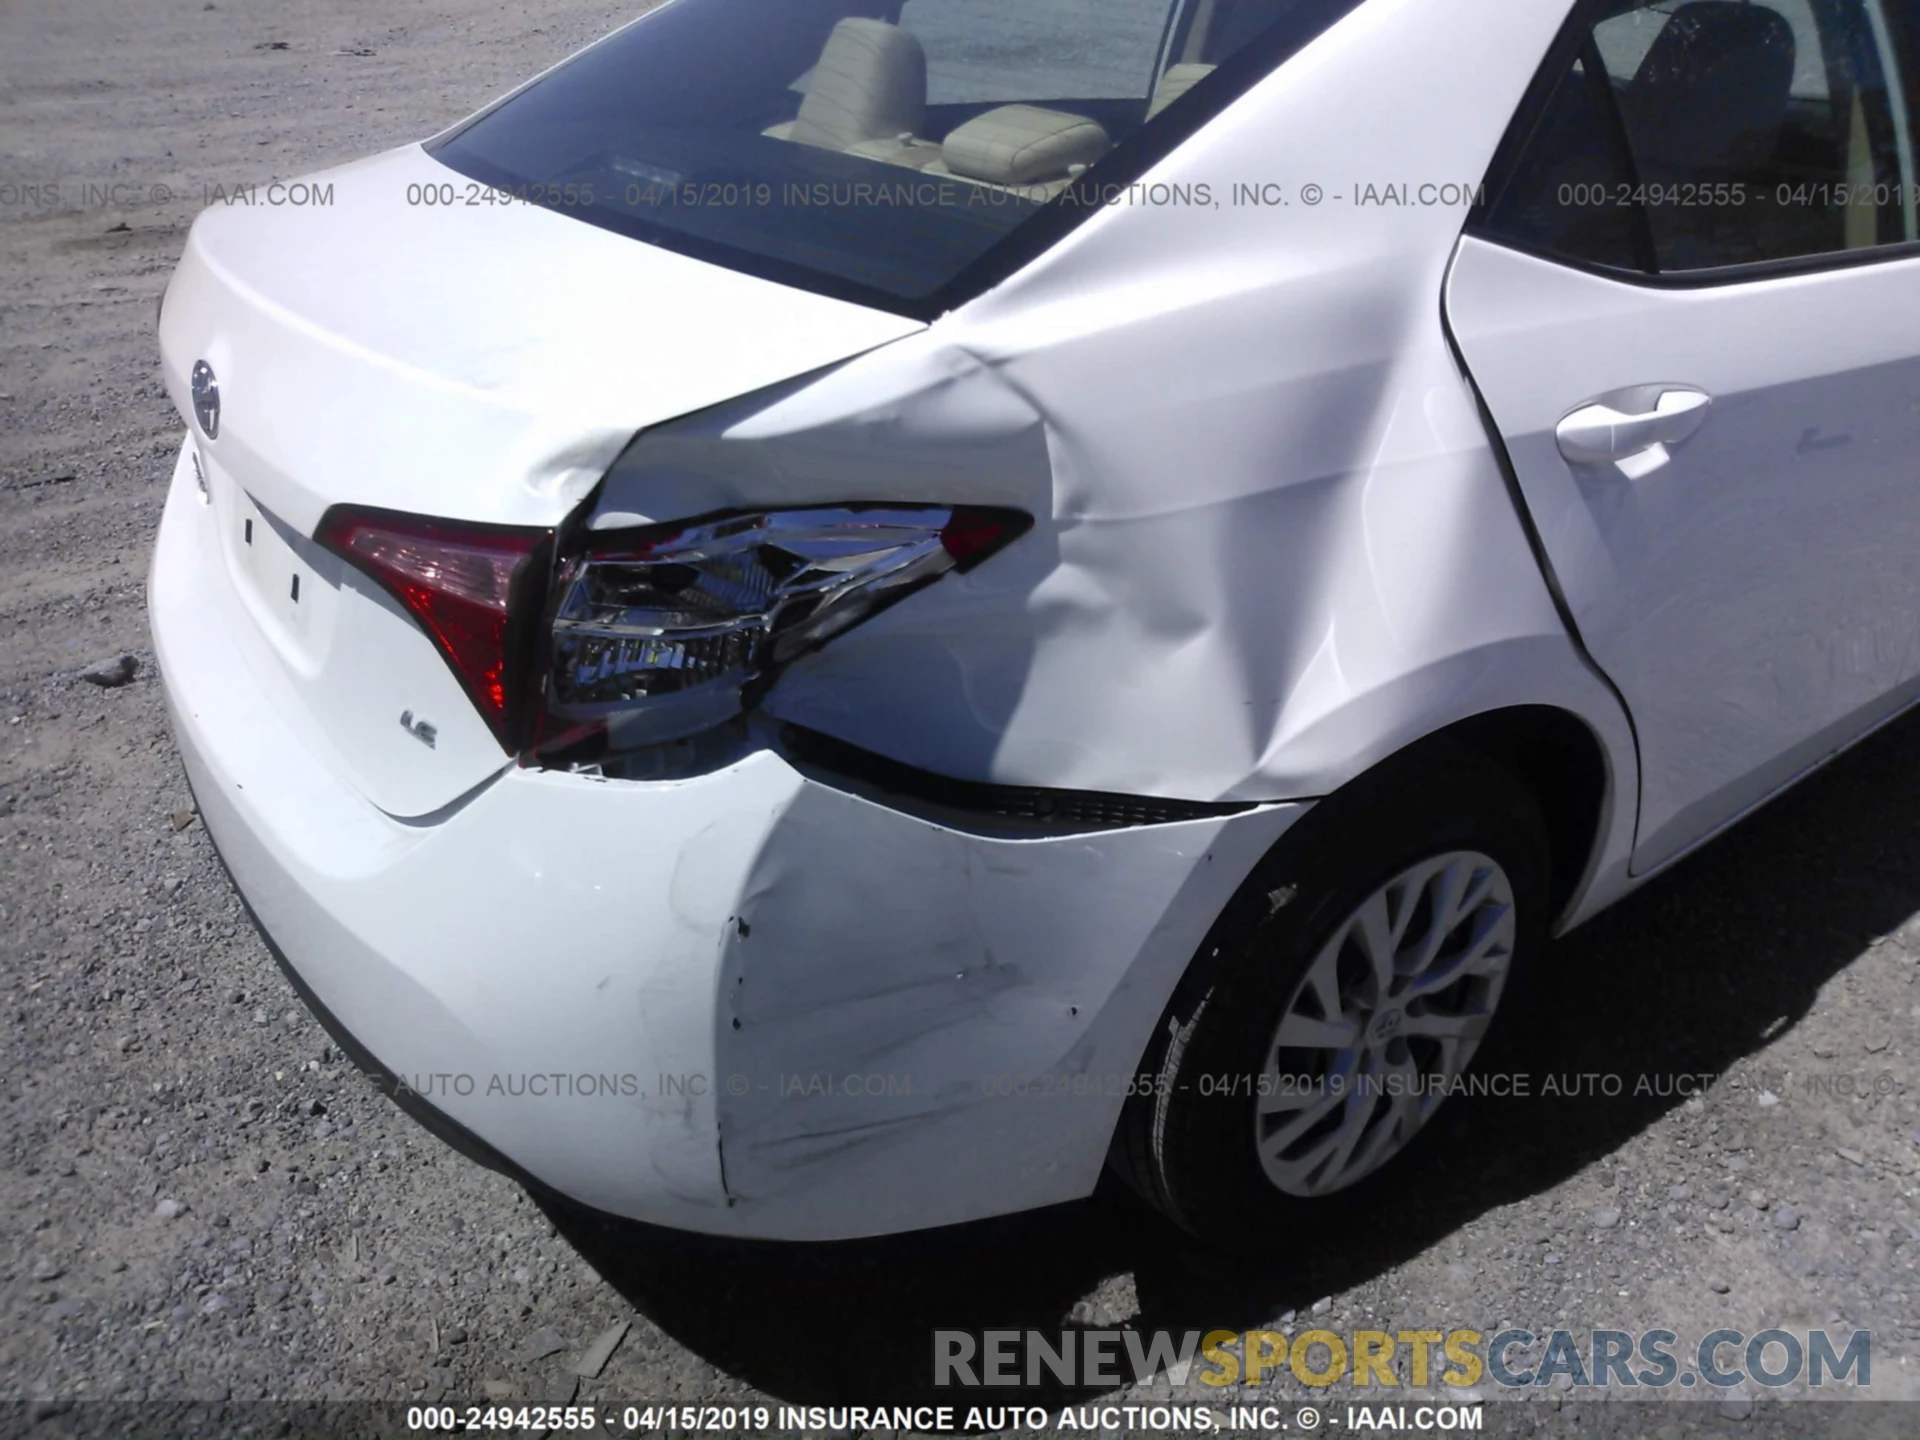 6 Photograph of a damaged car 5YFBURHEXKP870574 TOYOTA COROLLA 2019